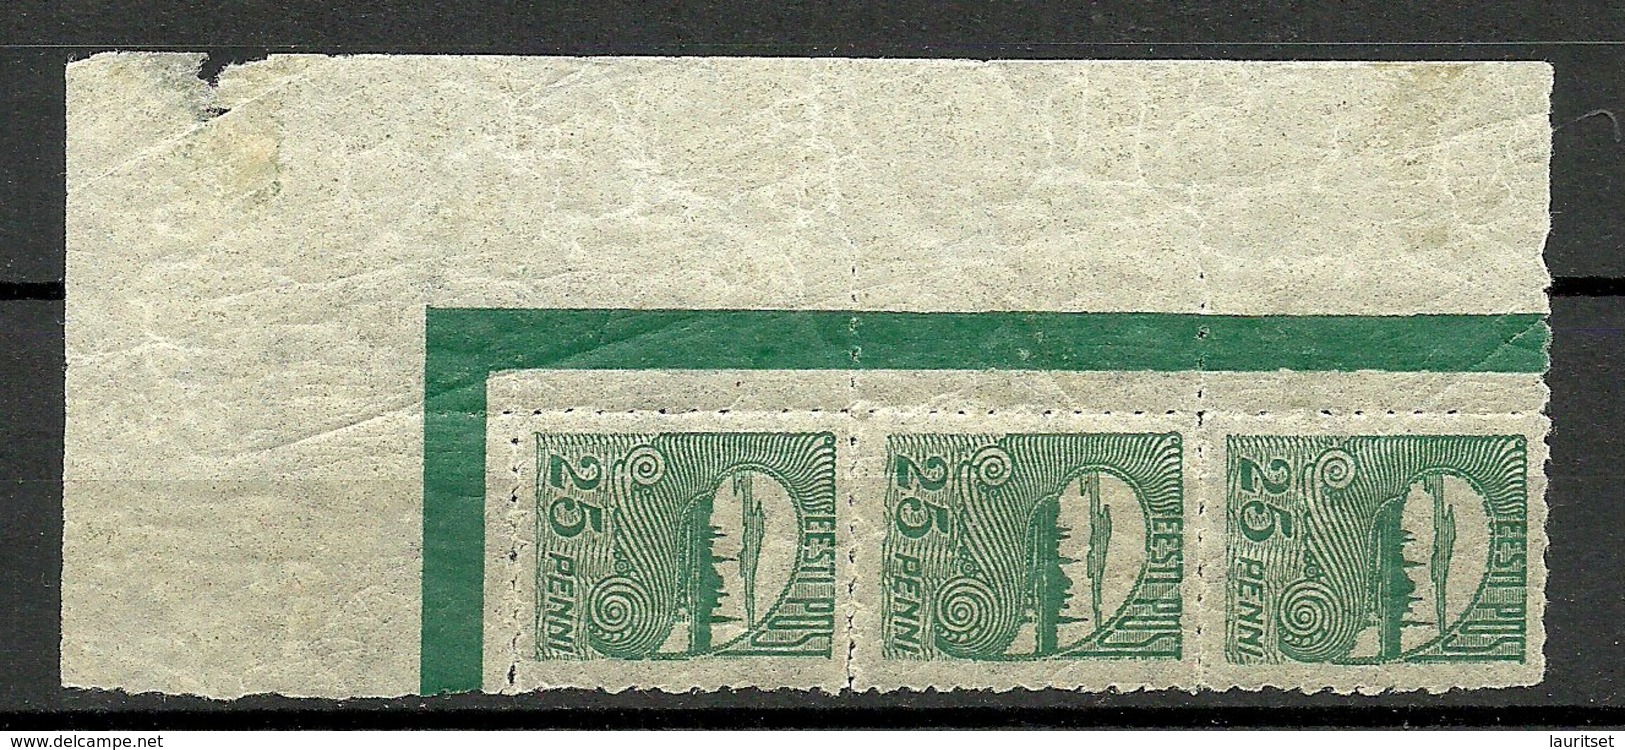 Estland Estonia 1920 Michel 15 Postmeister Zähnung Local Postmaster Perforation Sheet Corner MNH - Estland